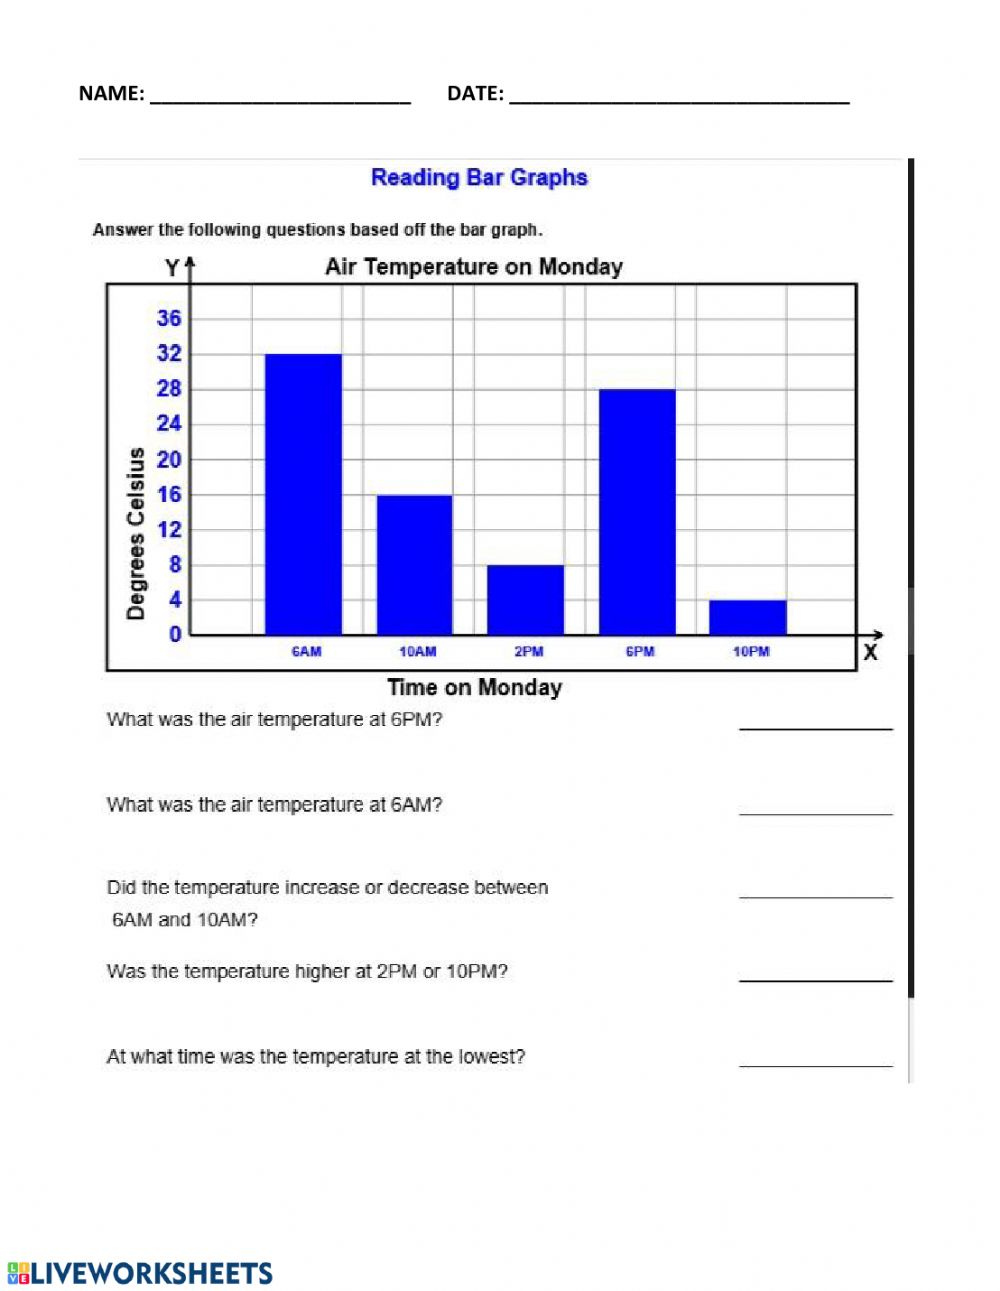 Reading Bar Graphs 2 Interactive Worksheet